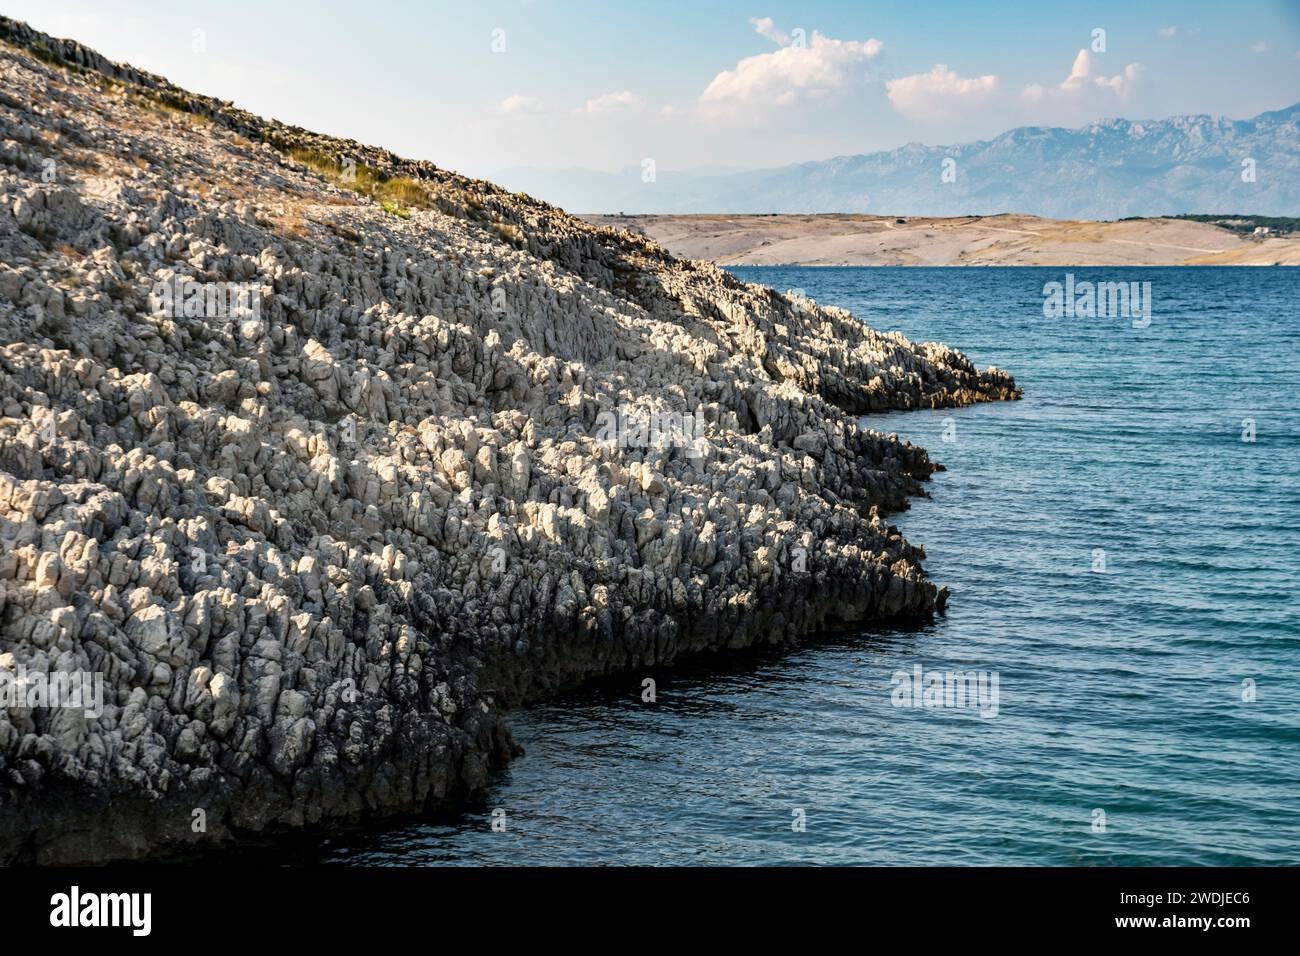 Hilly dalmatian coast of the Adriatic Sea near the city of Vrsi in Croatia Stock Photo